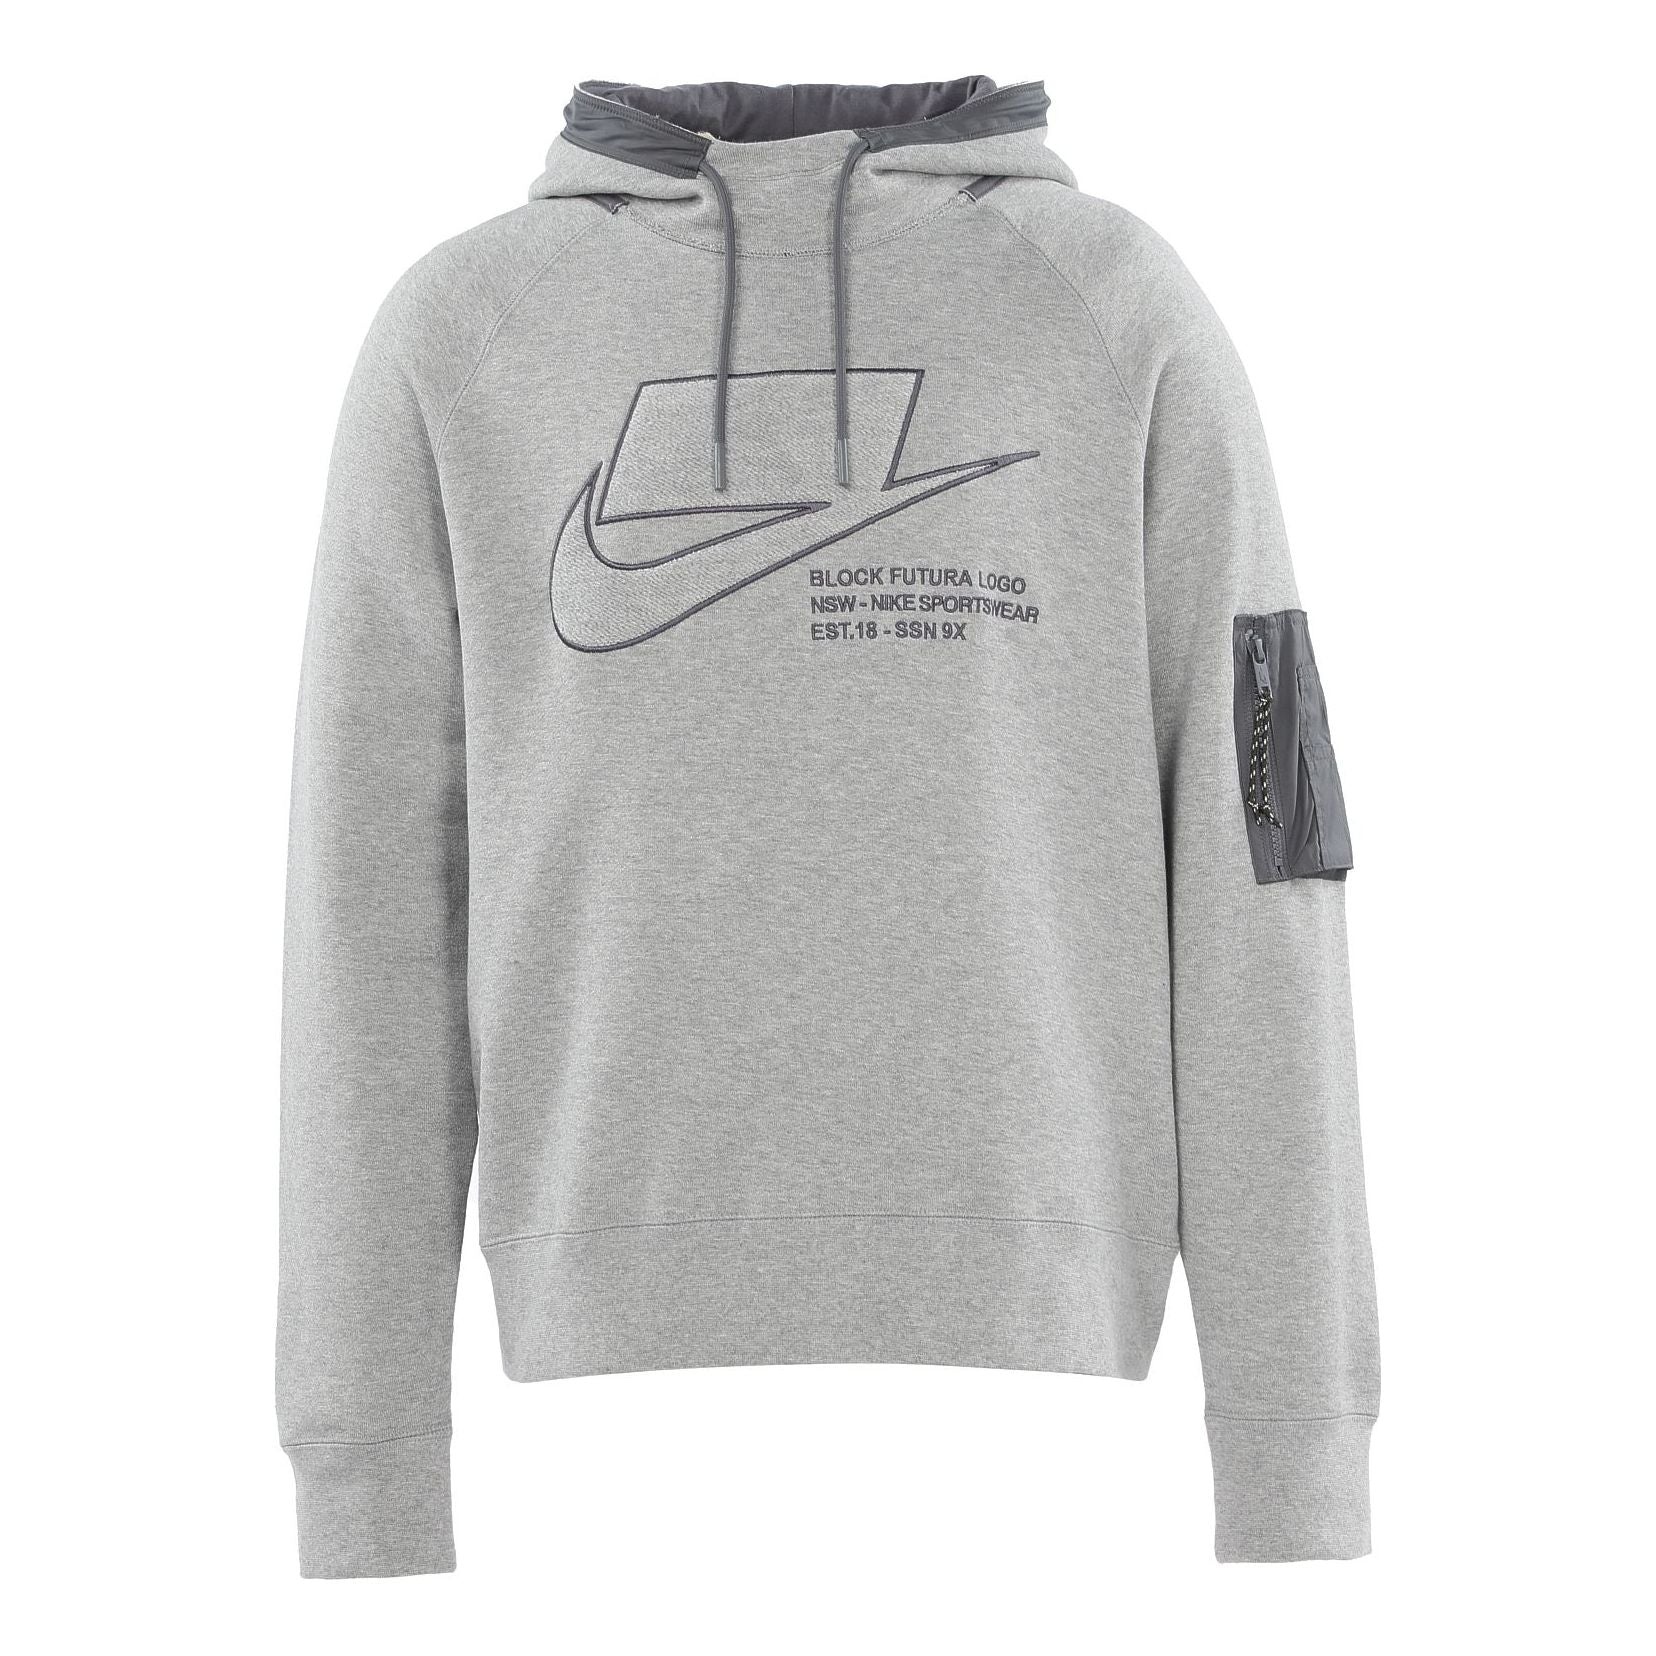 Nike Sportswear logo Printing Woven Pullover dark grey Gray CU3798-050 - 1